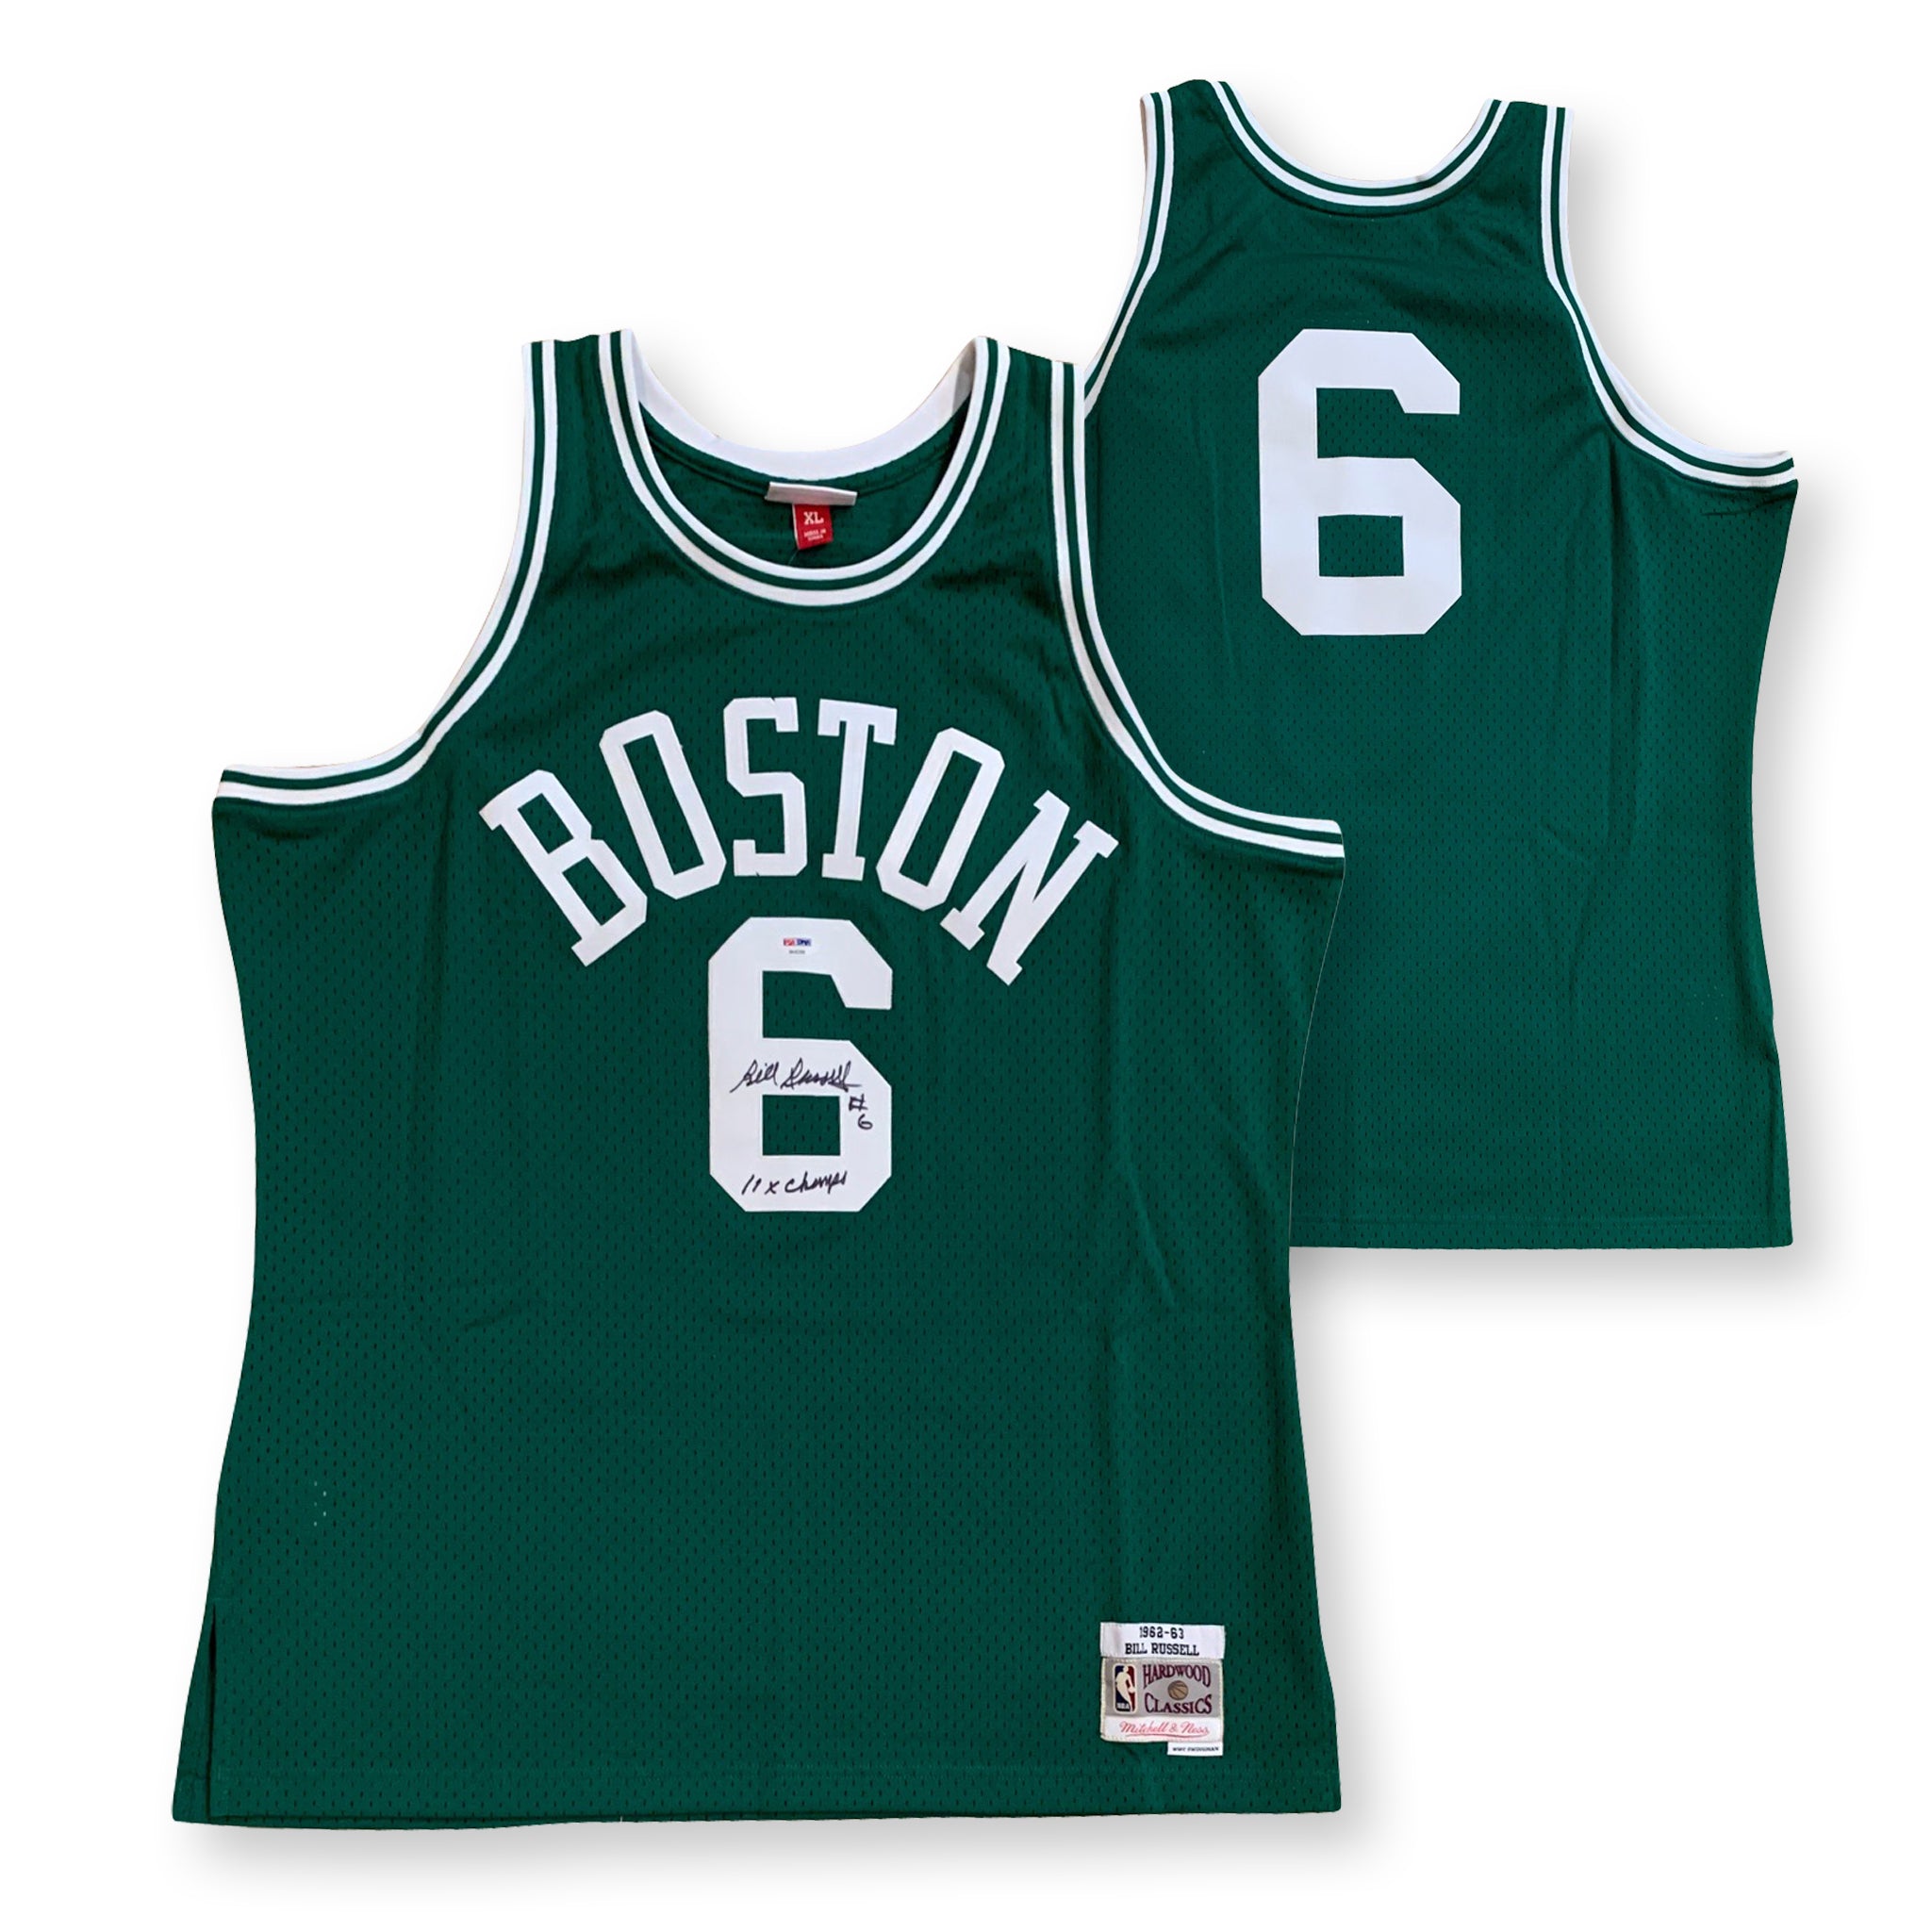 Bill Russell Authentic 1962-63 Hardwood Classics Boston Celtics